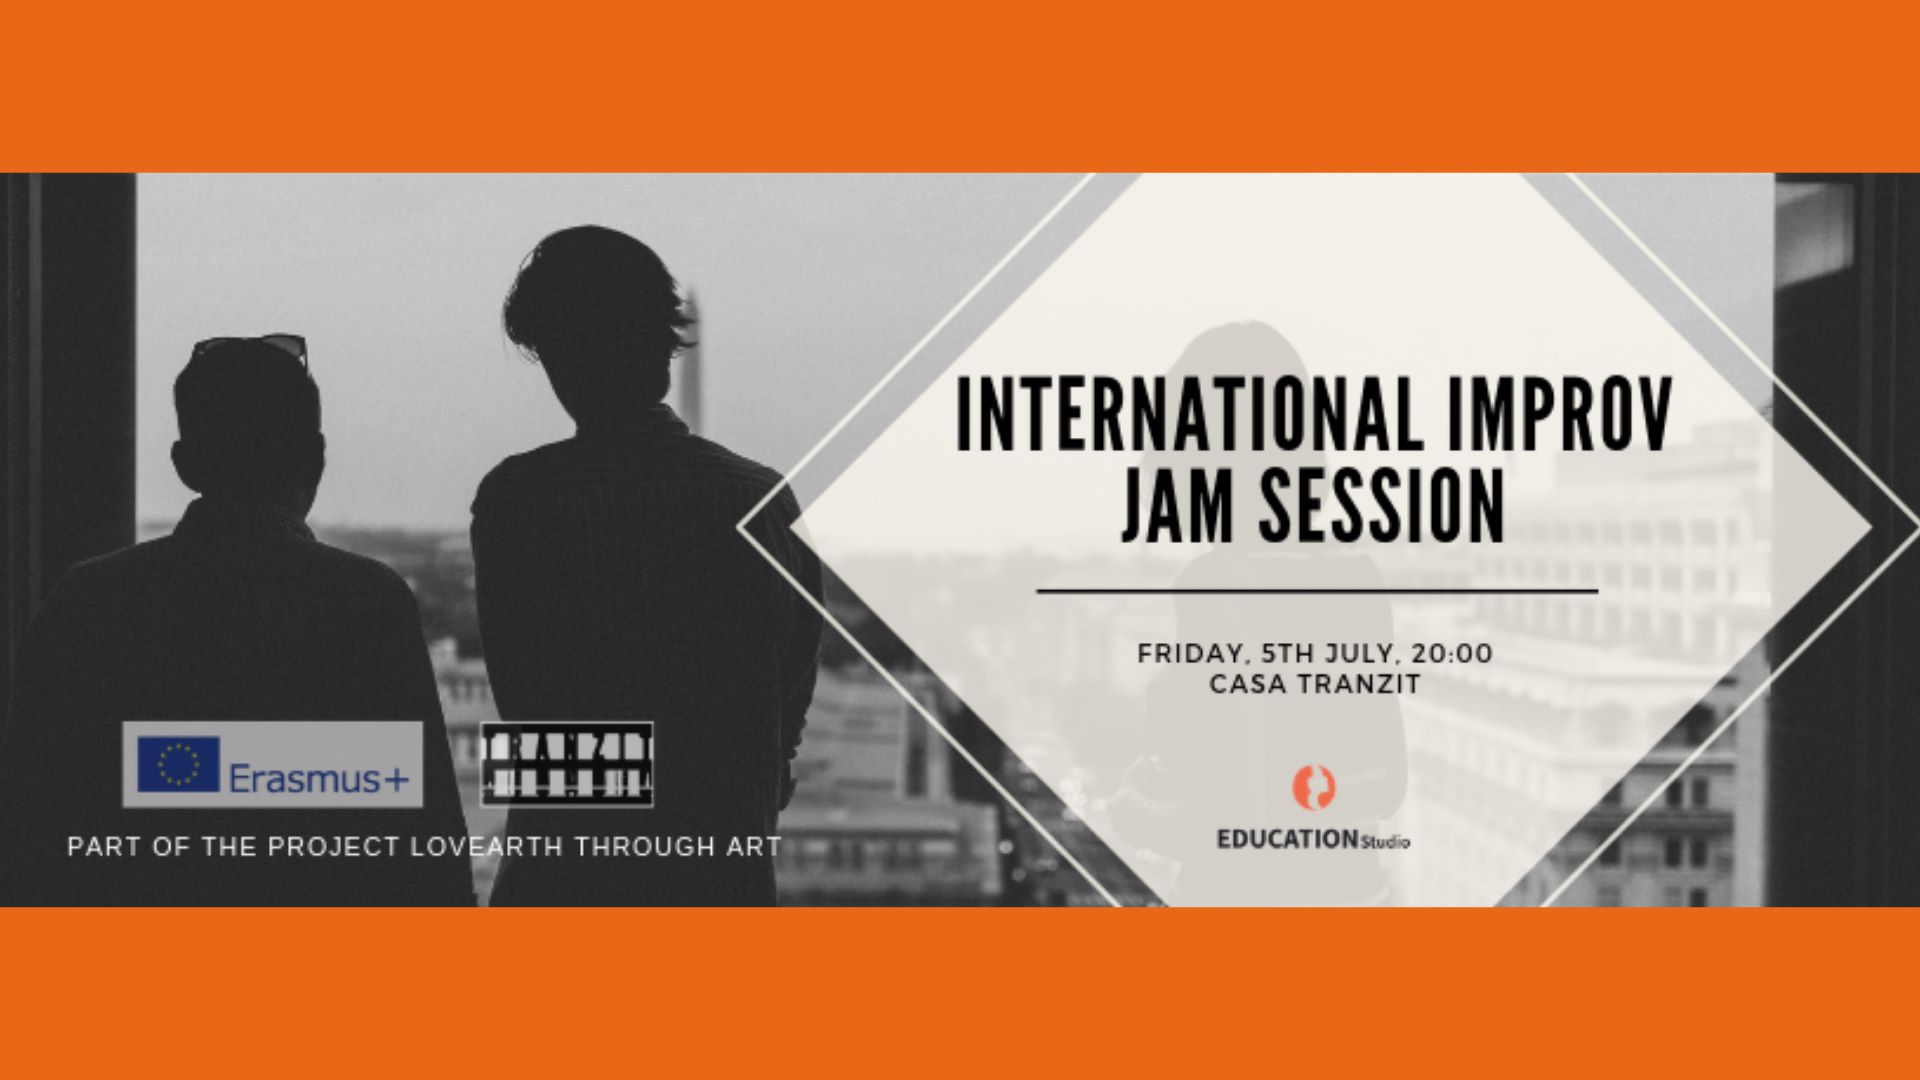 International Improv Jam Session